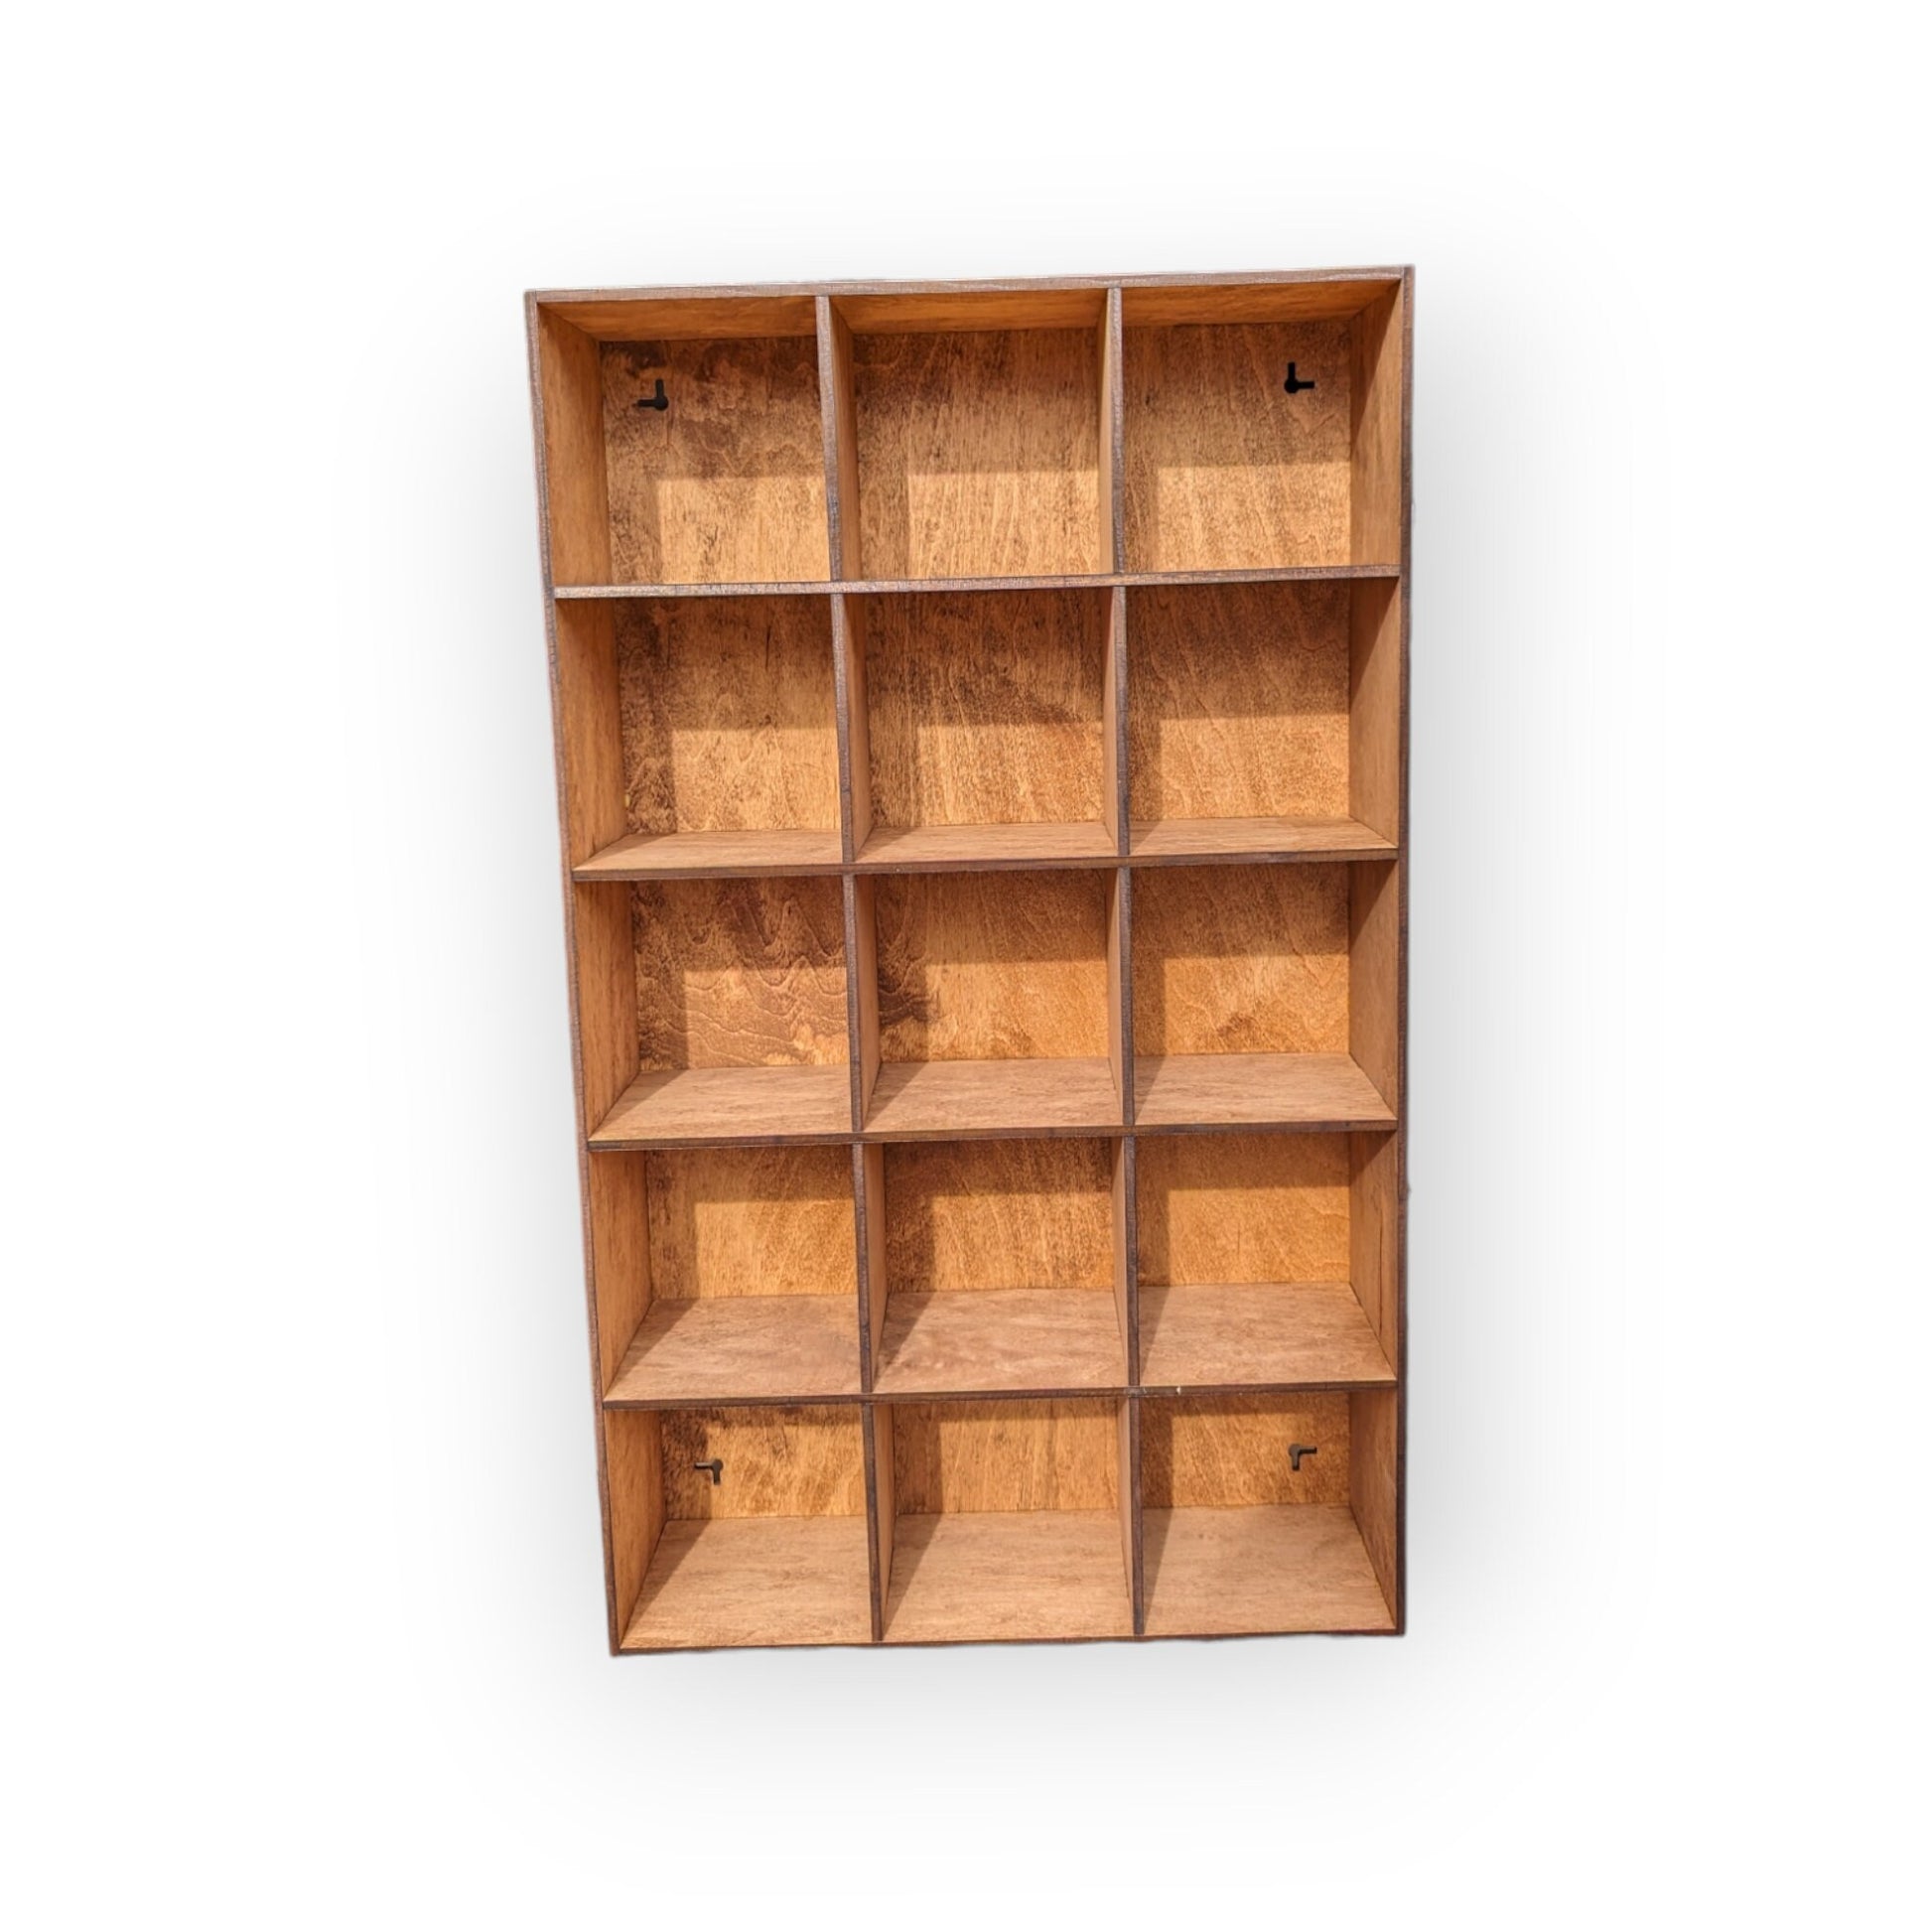 15 Compartment Wooden Display Shelf - Coffee Mug Cup Shelf - Curio Cabinet- Knick Knack Display - Printer Tray -Figure Organizer Display